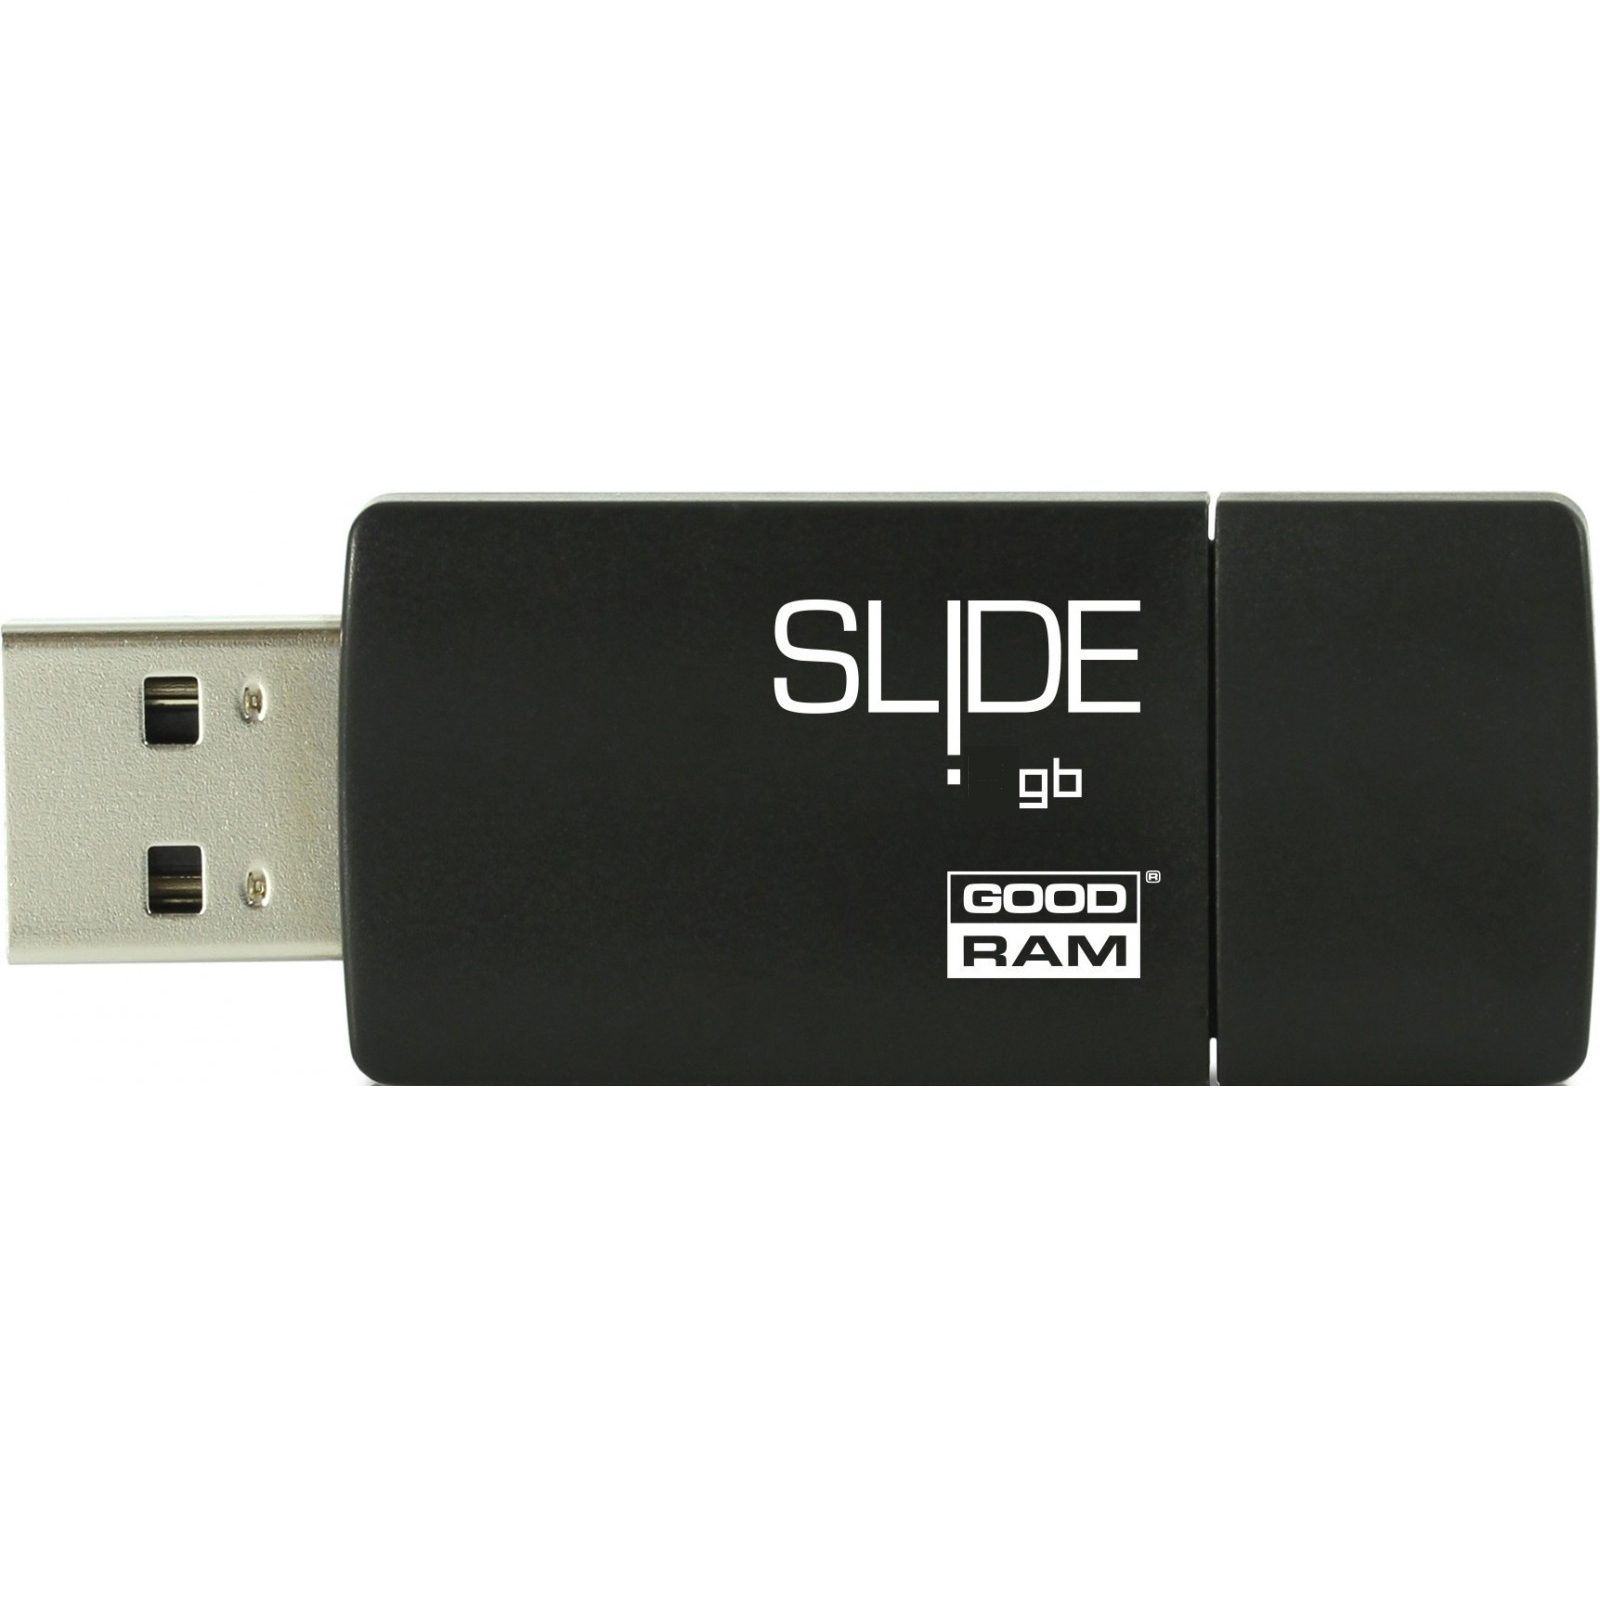 USB флеш накопитель Goodram 16GB SLIDE Blue USB 2.0 (PD16GH2GRSLBR10) изображение 2